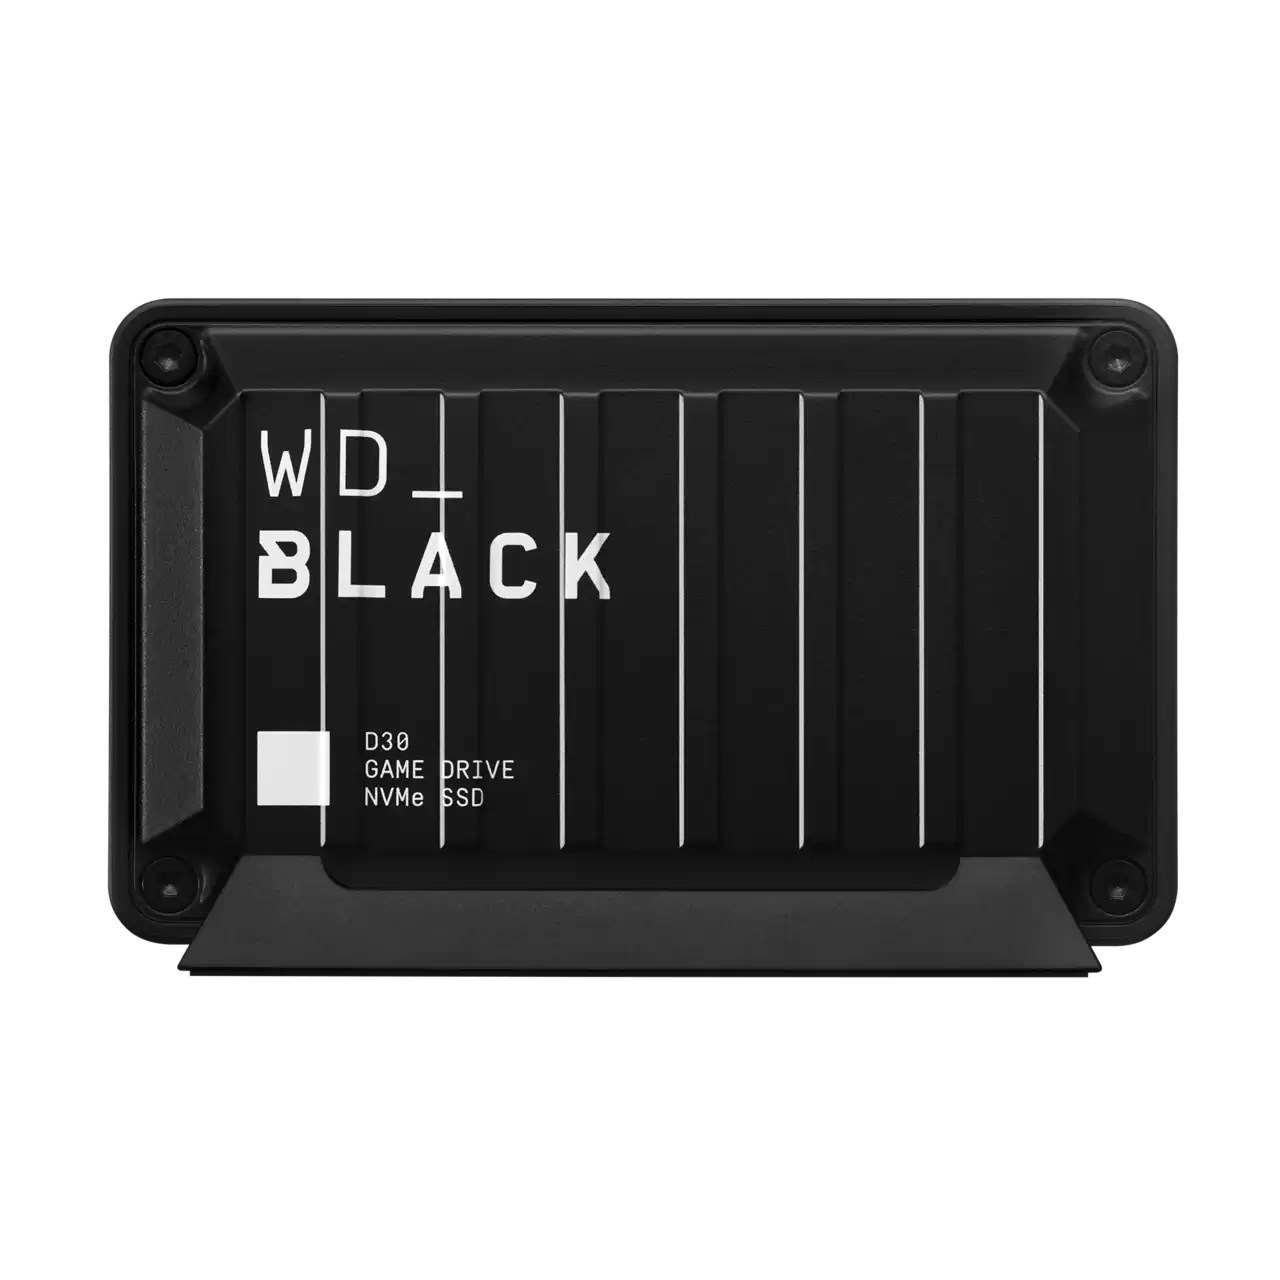 SanDisk externí SSD 1TB WD BLACK D30 Game Drive0 